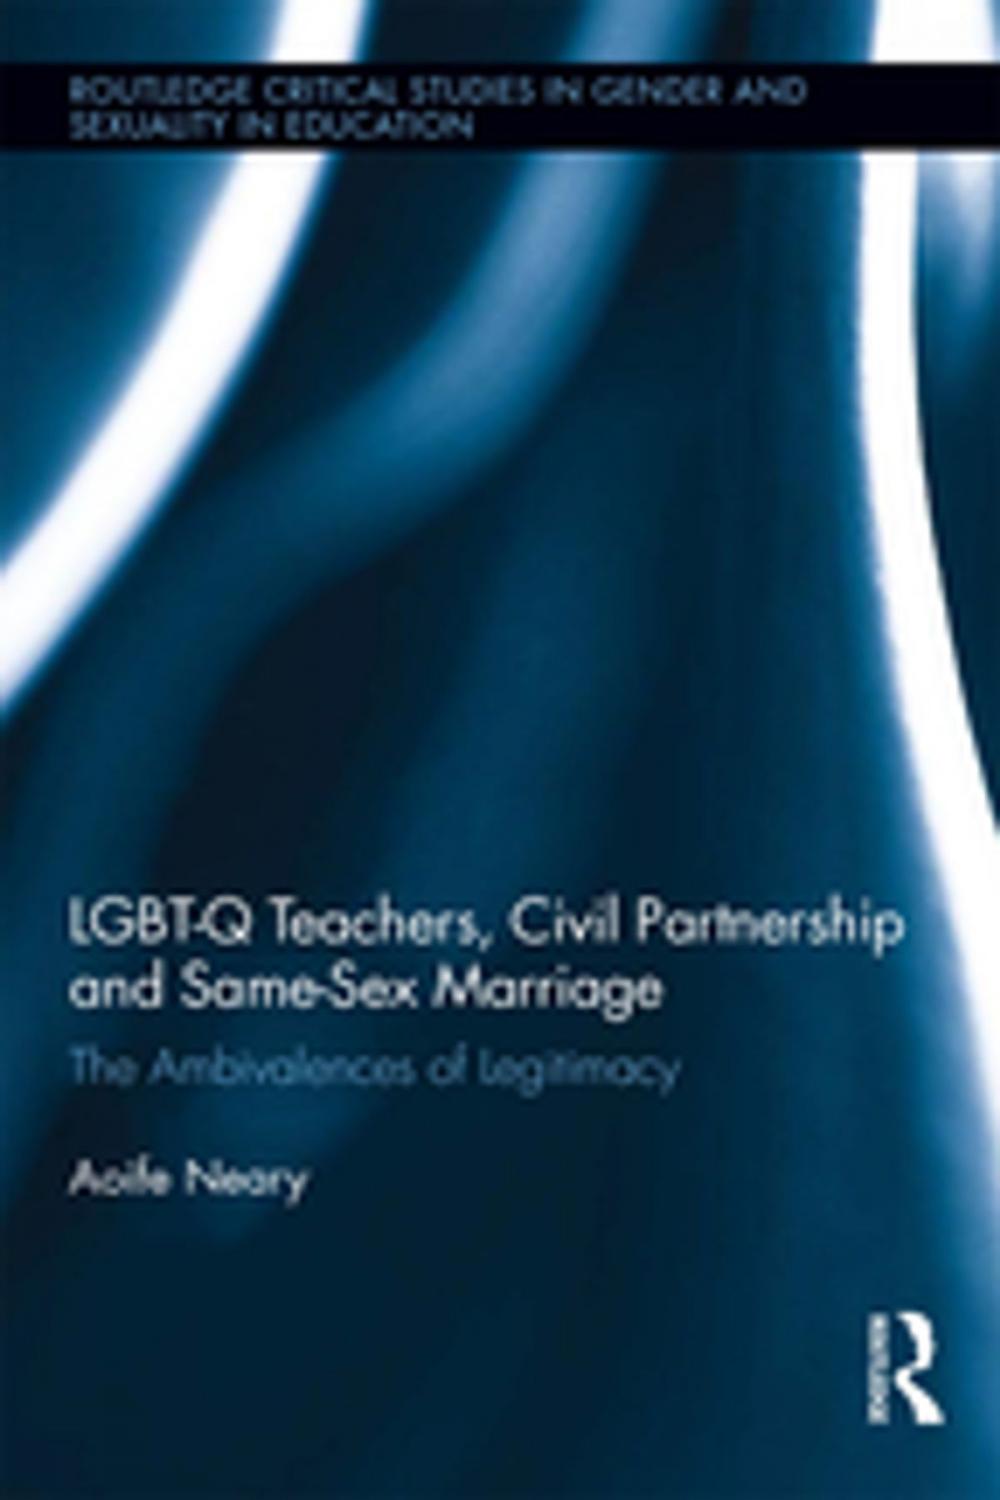 Big bigCover of LGBT-Q Teachers, Civil Partnership and Same-Sex Marriage